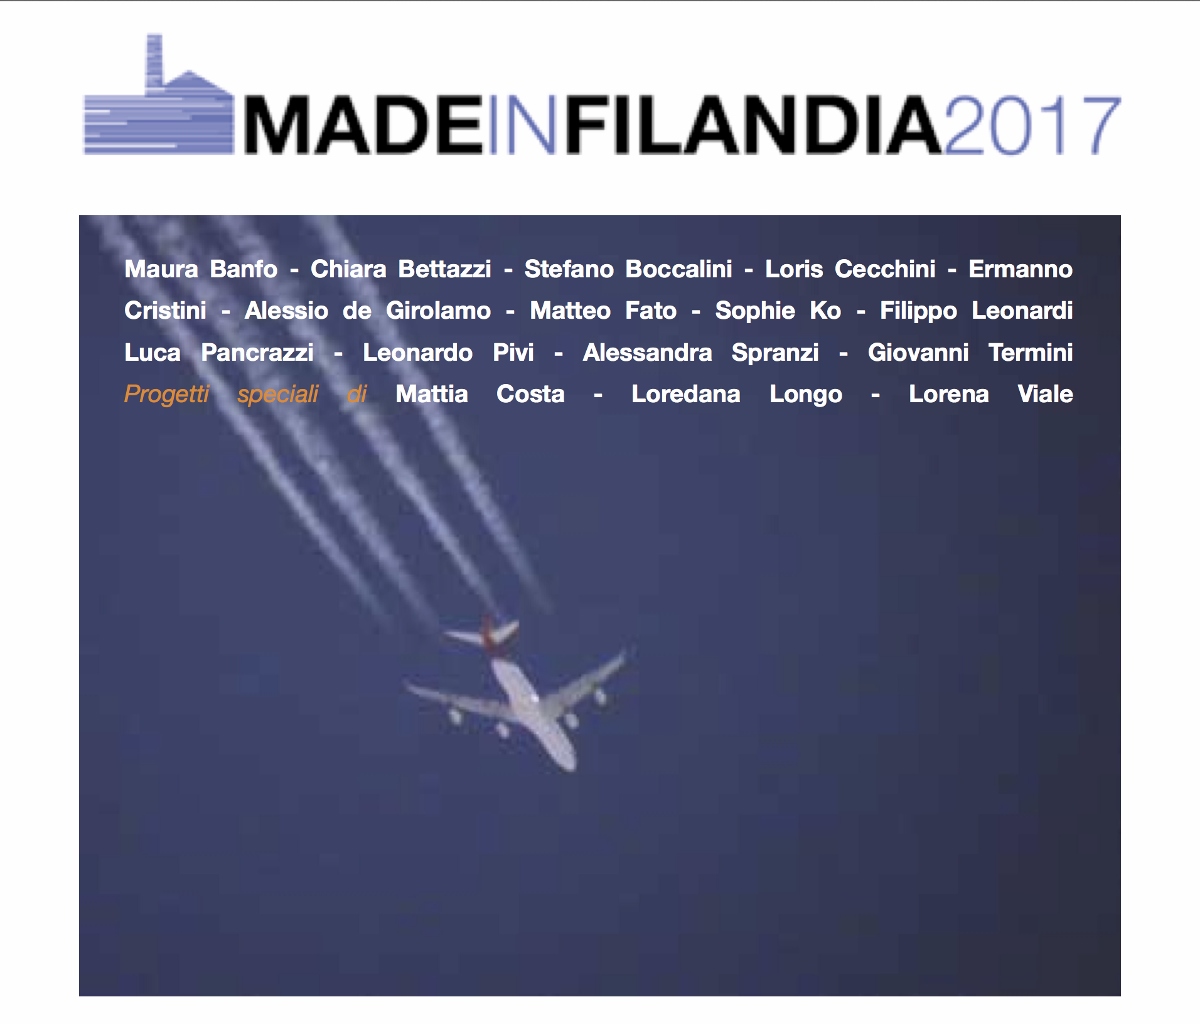 Madeinfilandia 2017